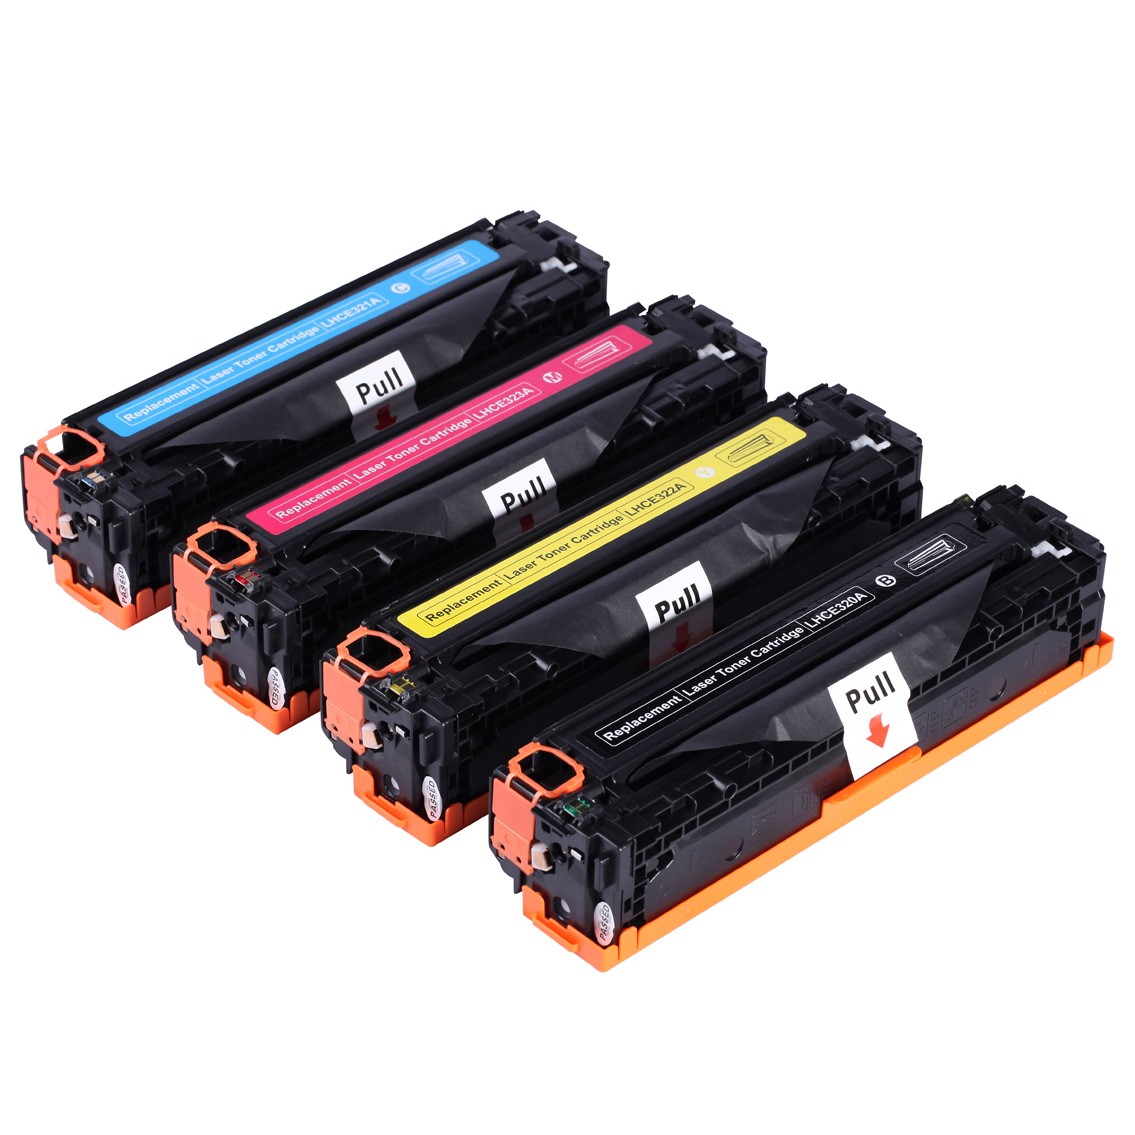 Compatible toner cartridges for HP CE320A-CE323A